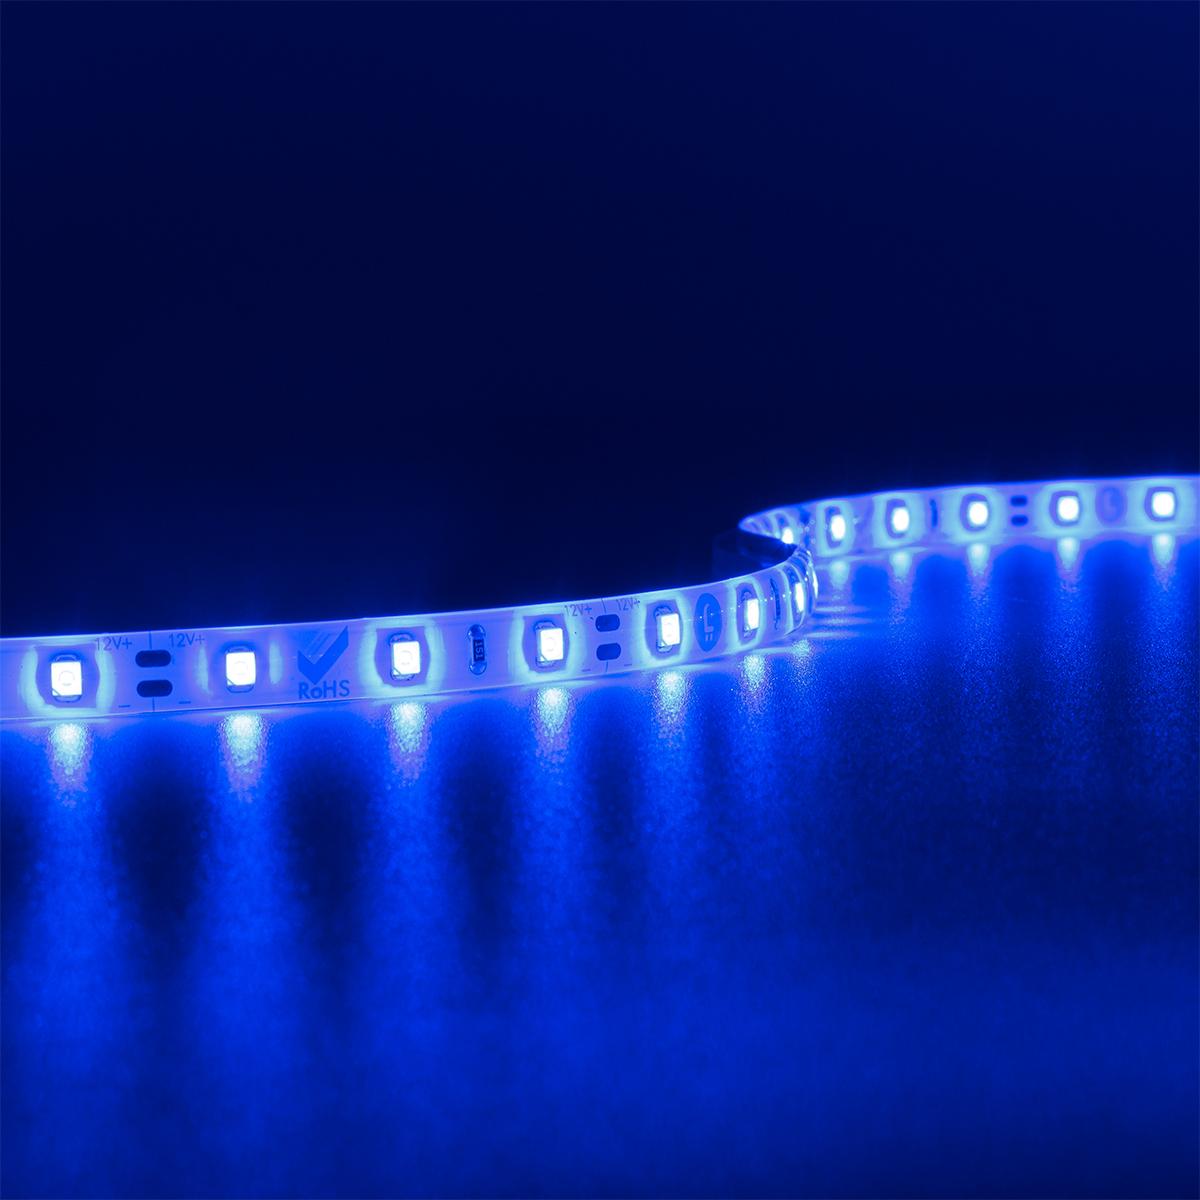 12V LED Streifen mit 60 blauen LEDs/m